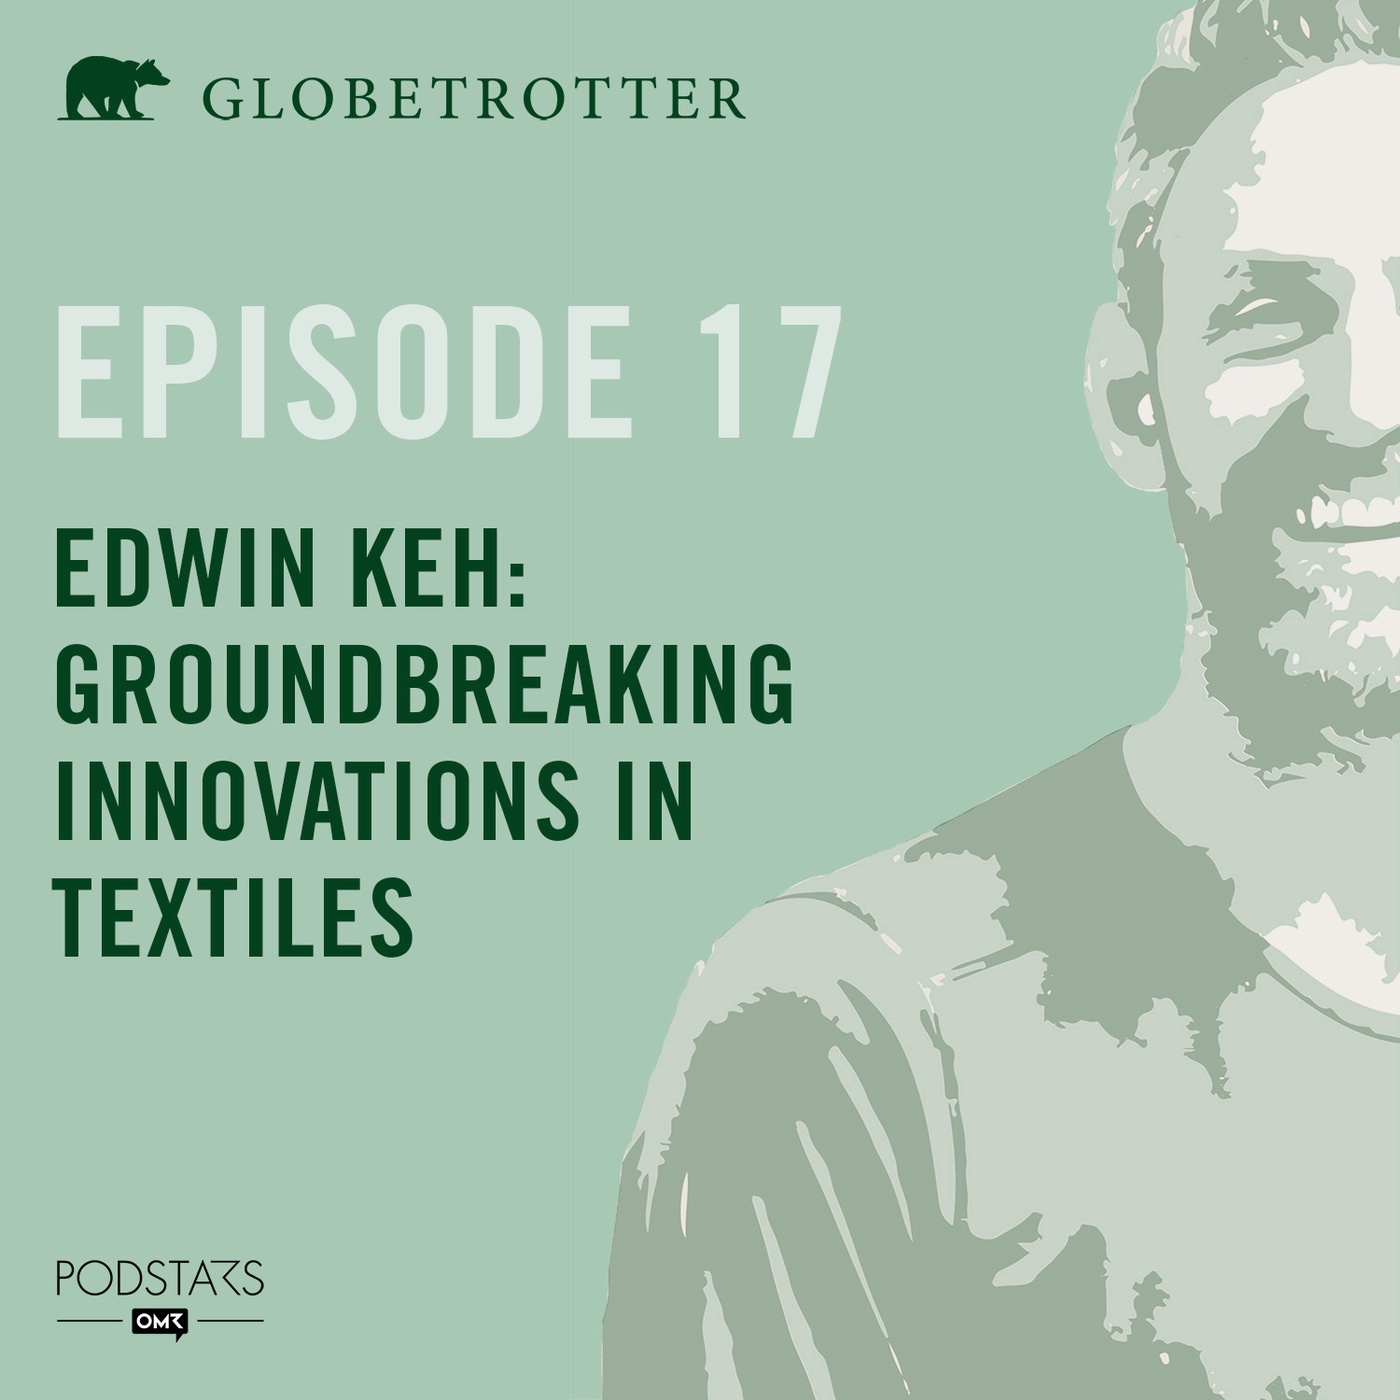 Edwin Keh: Groundbreaking innovations in textiles